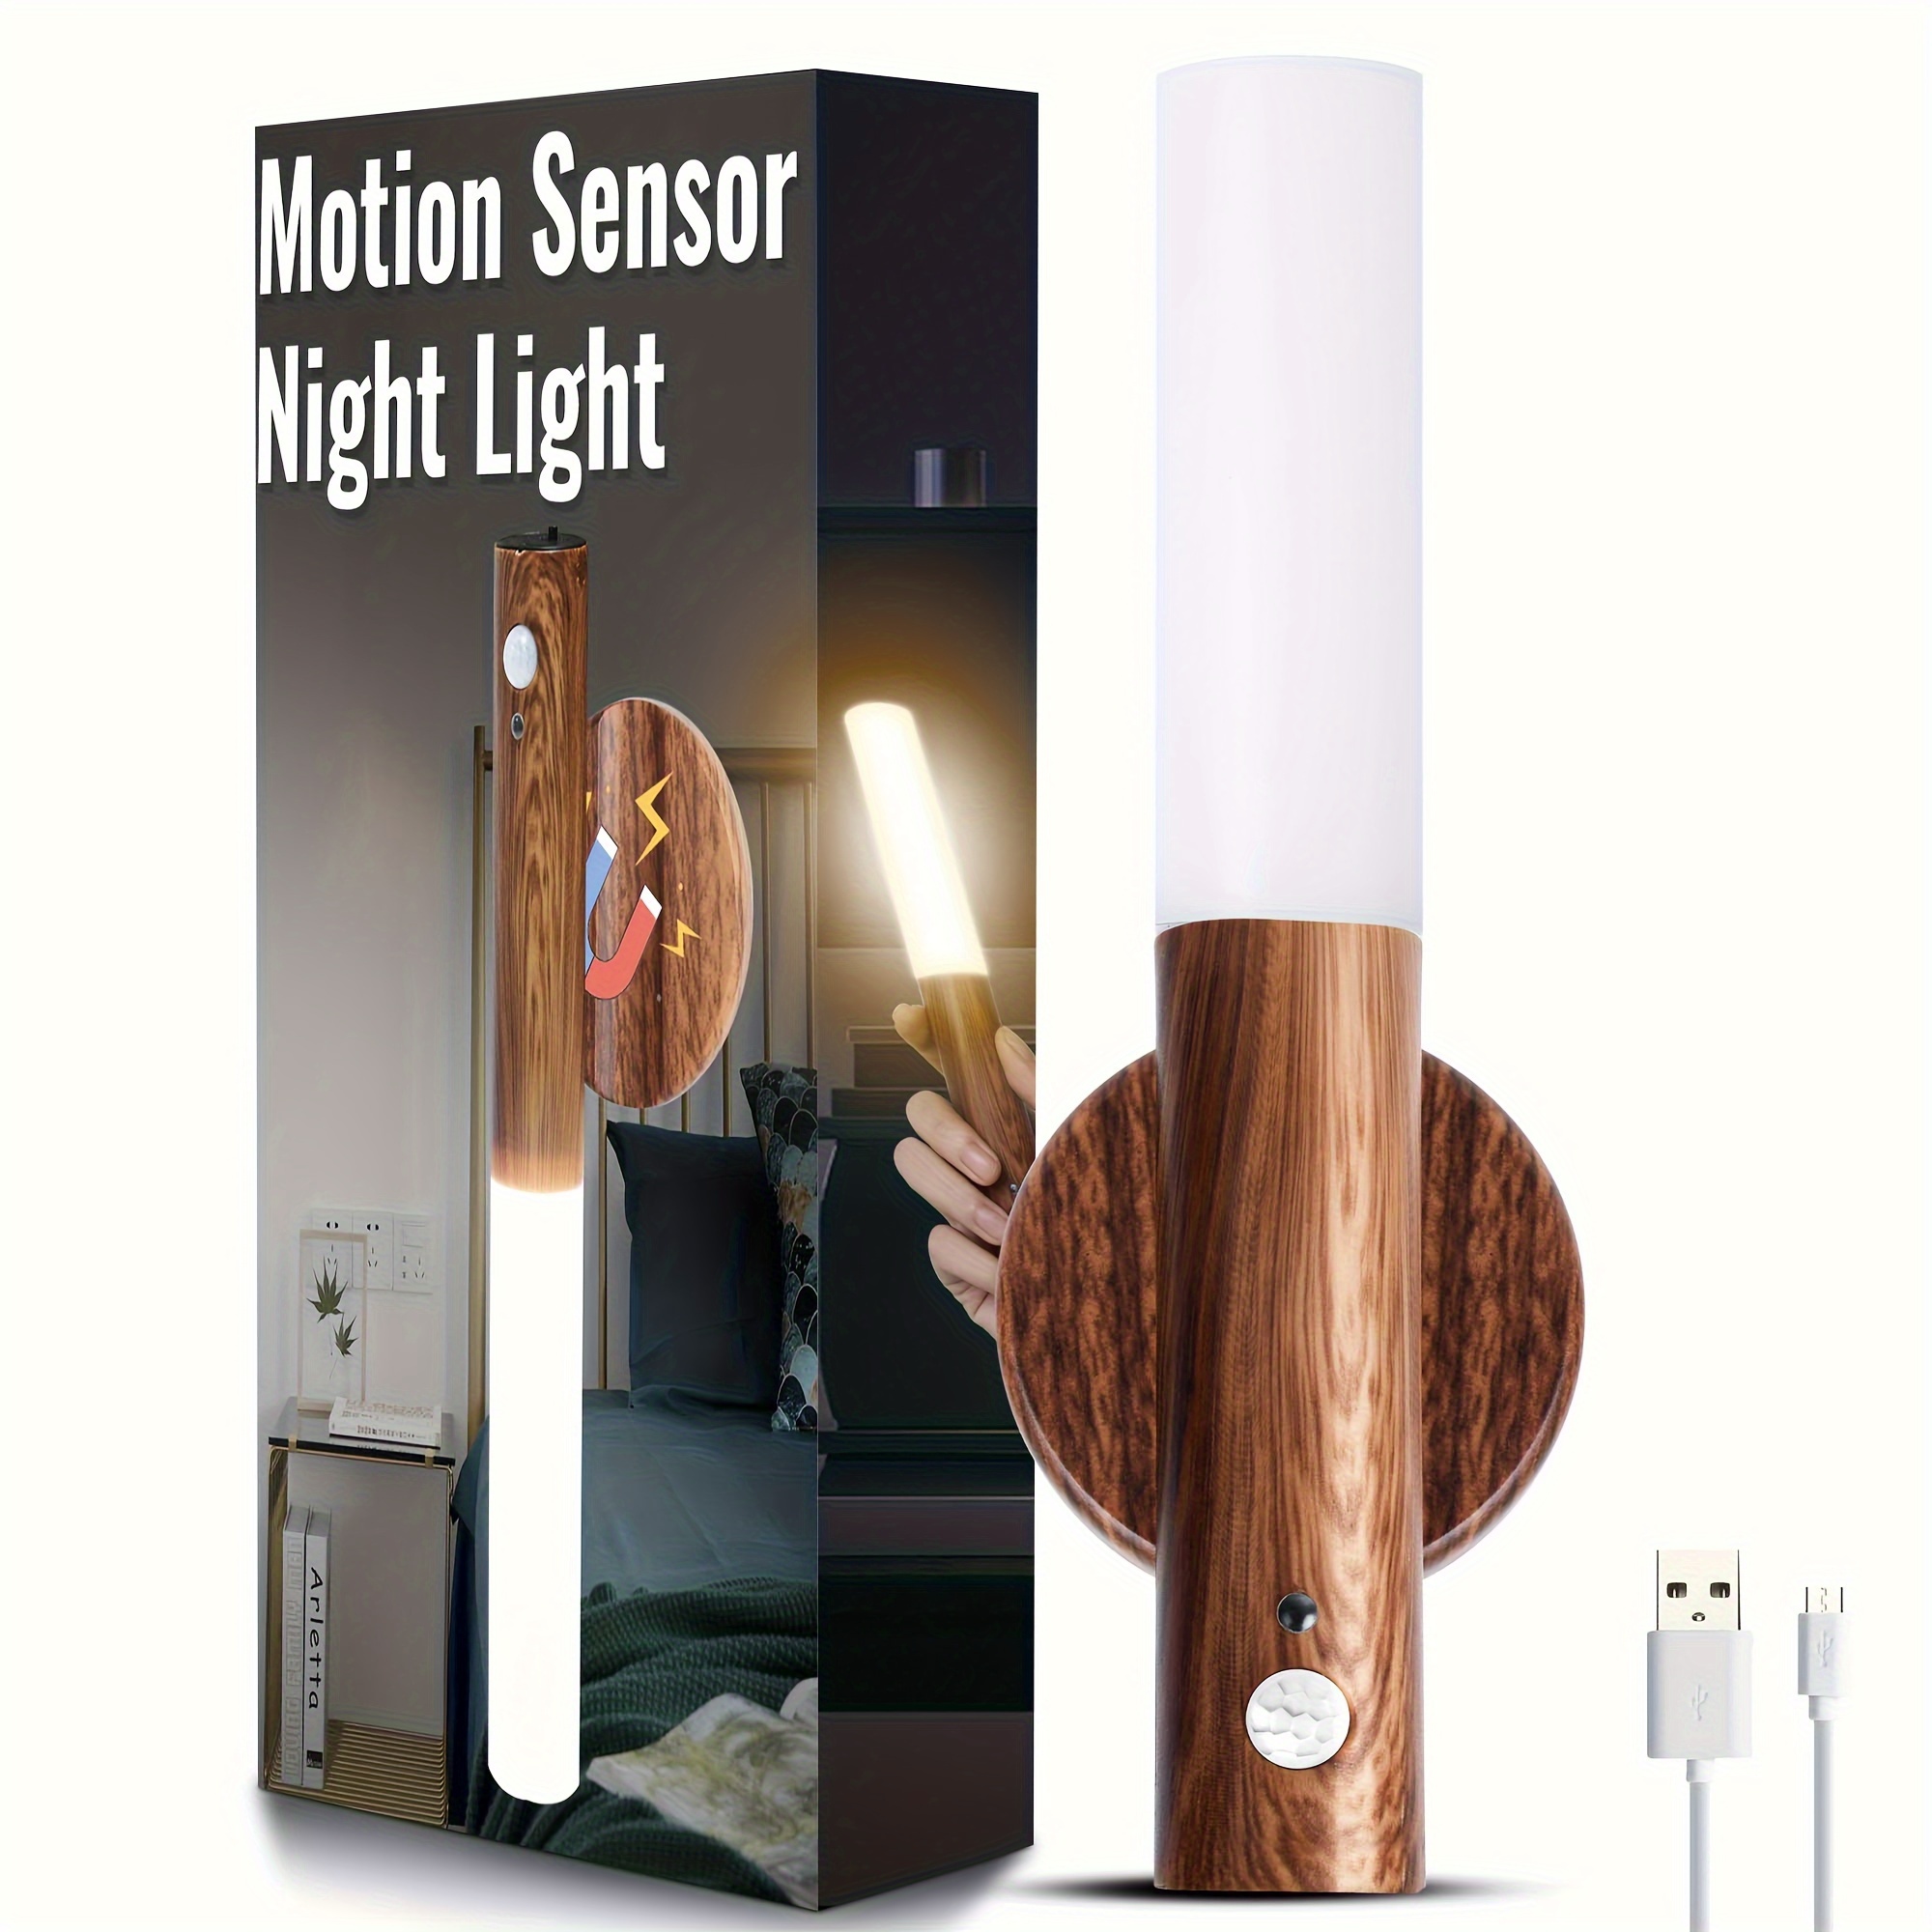 Motion Sensor Light, Closet Light, Wall Light, Stick Anywhere with